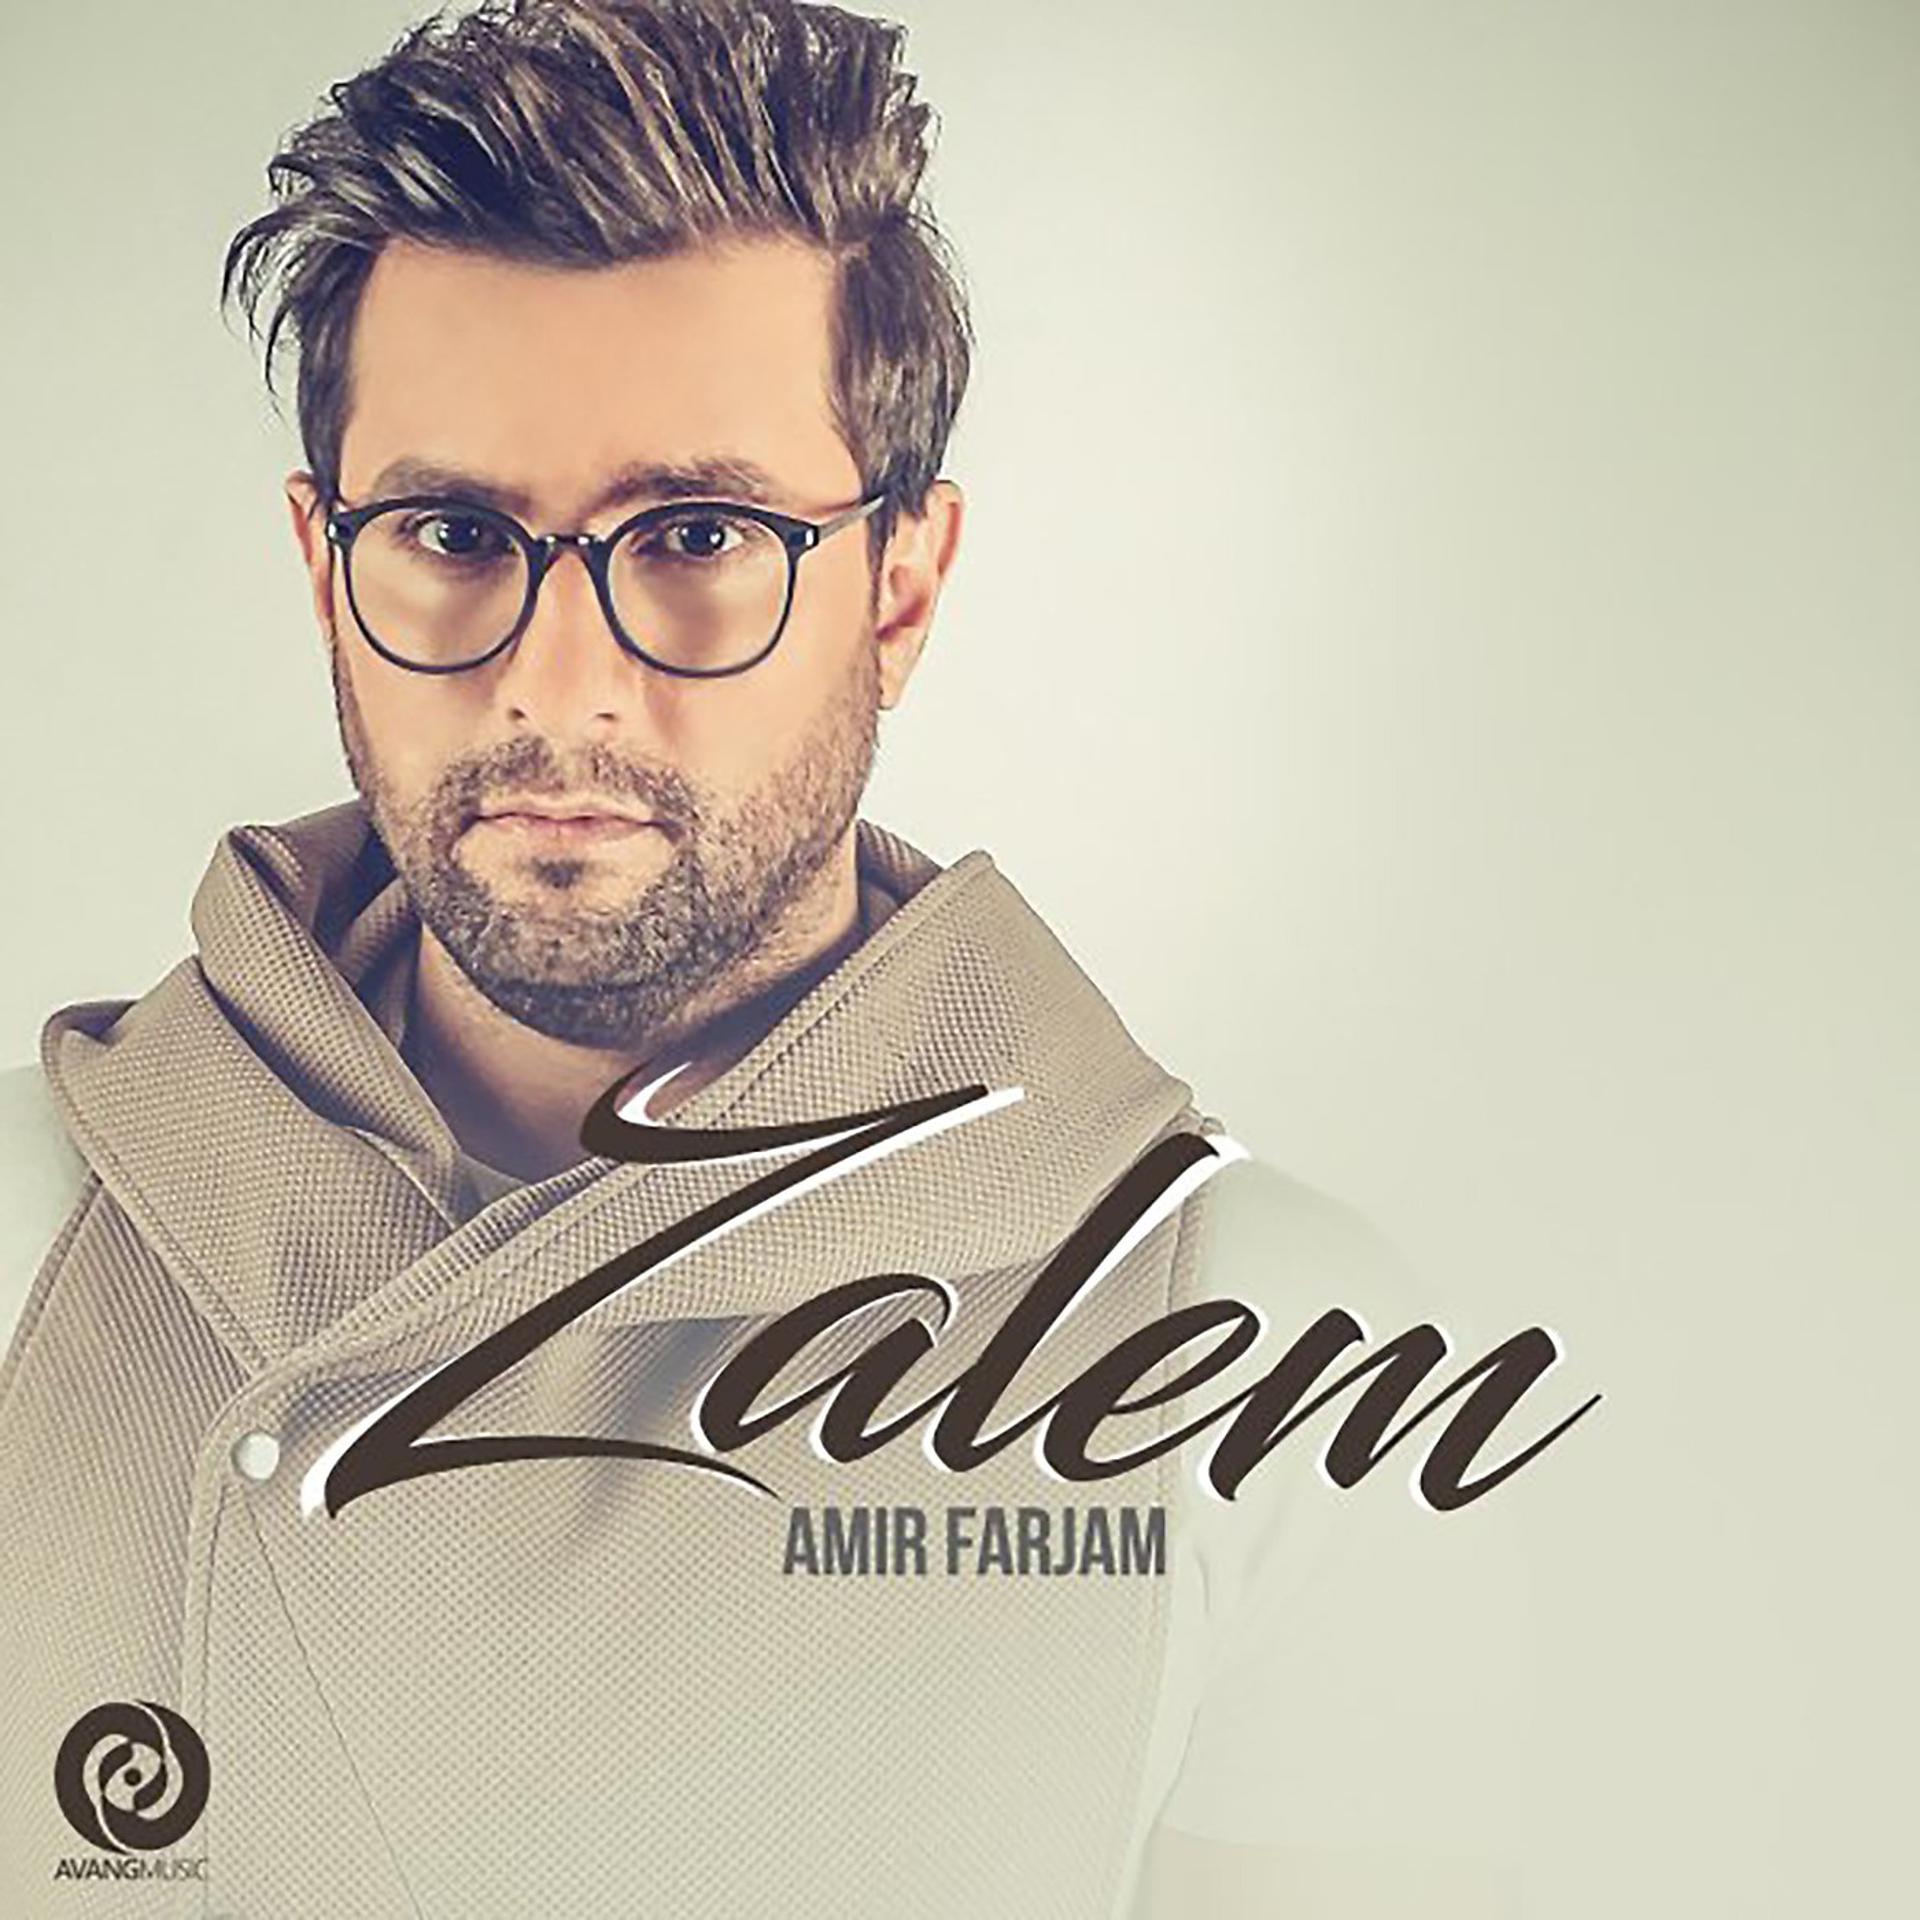 Постер альбома Zalem